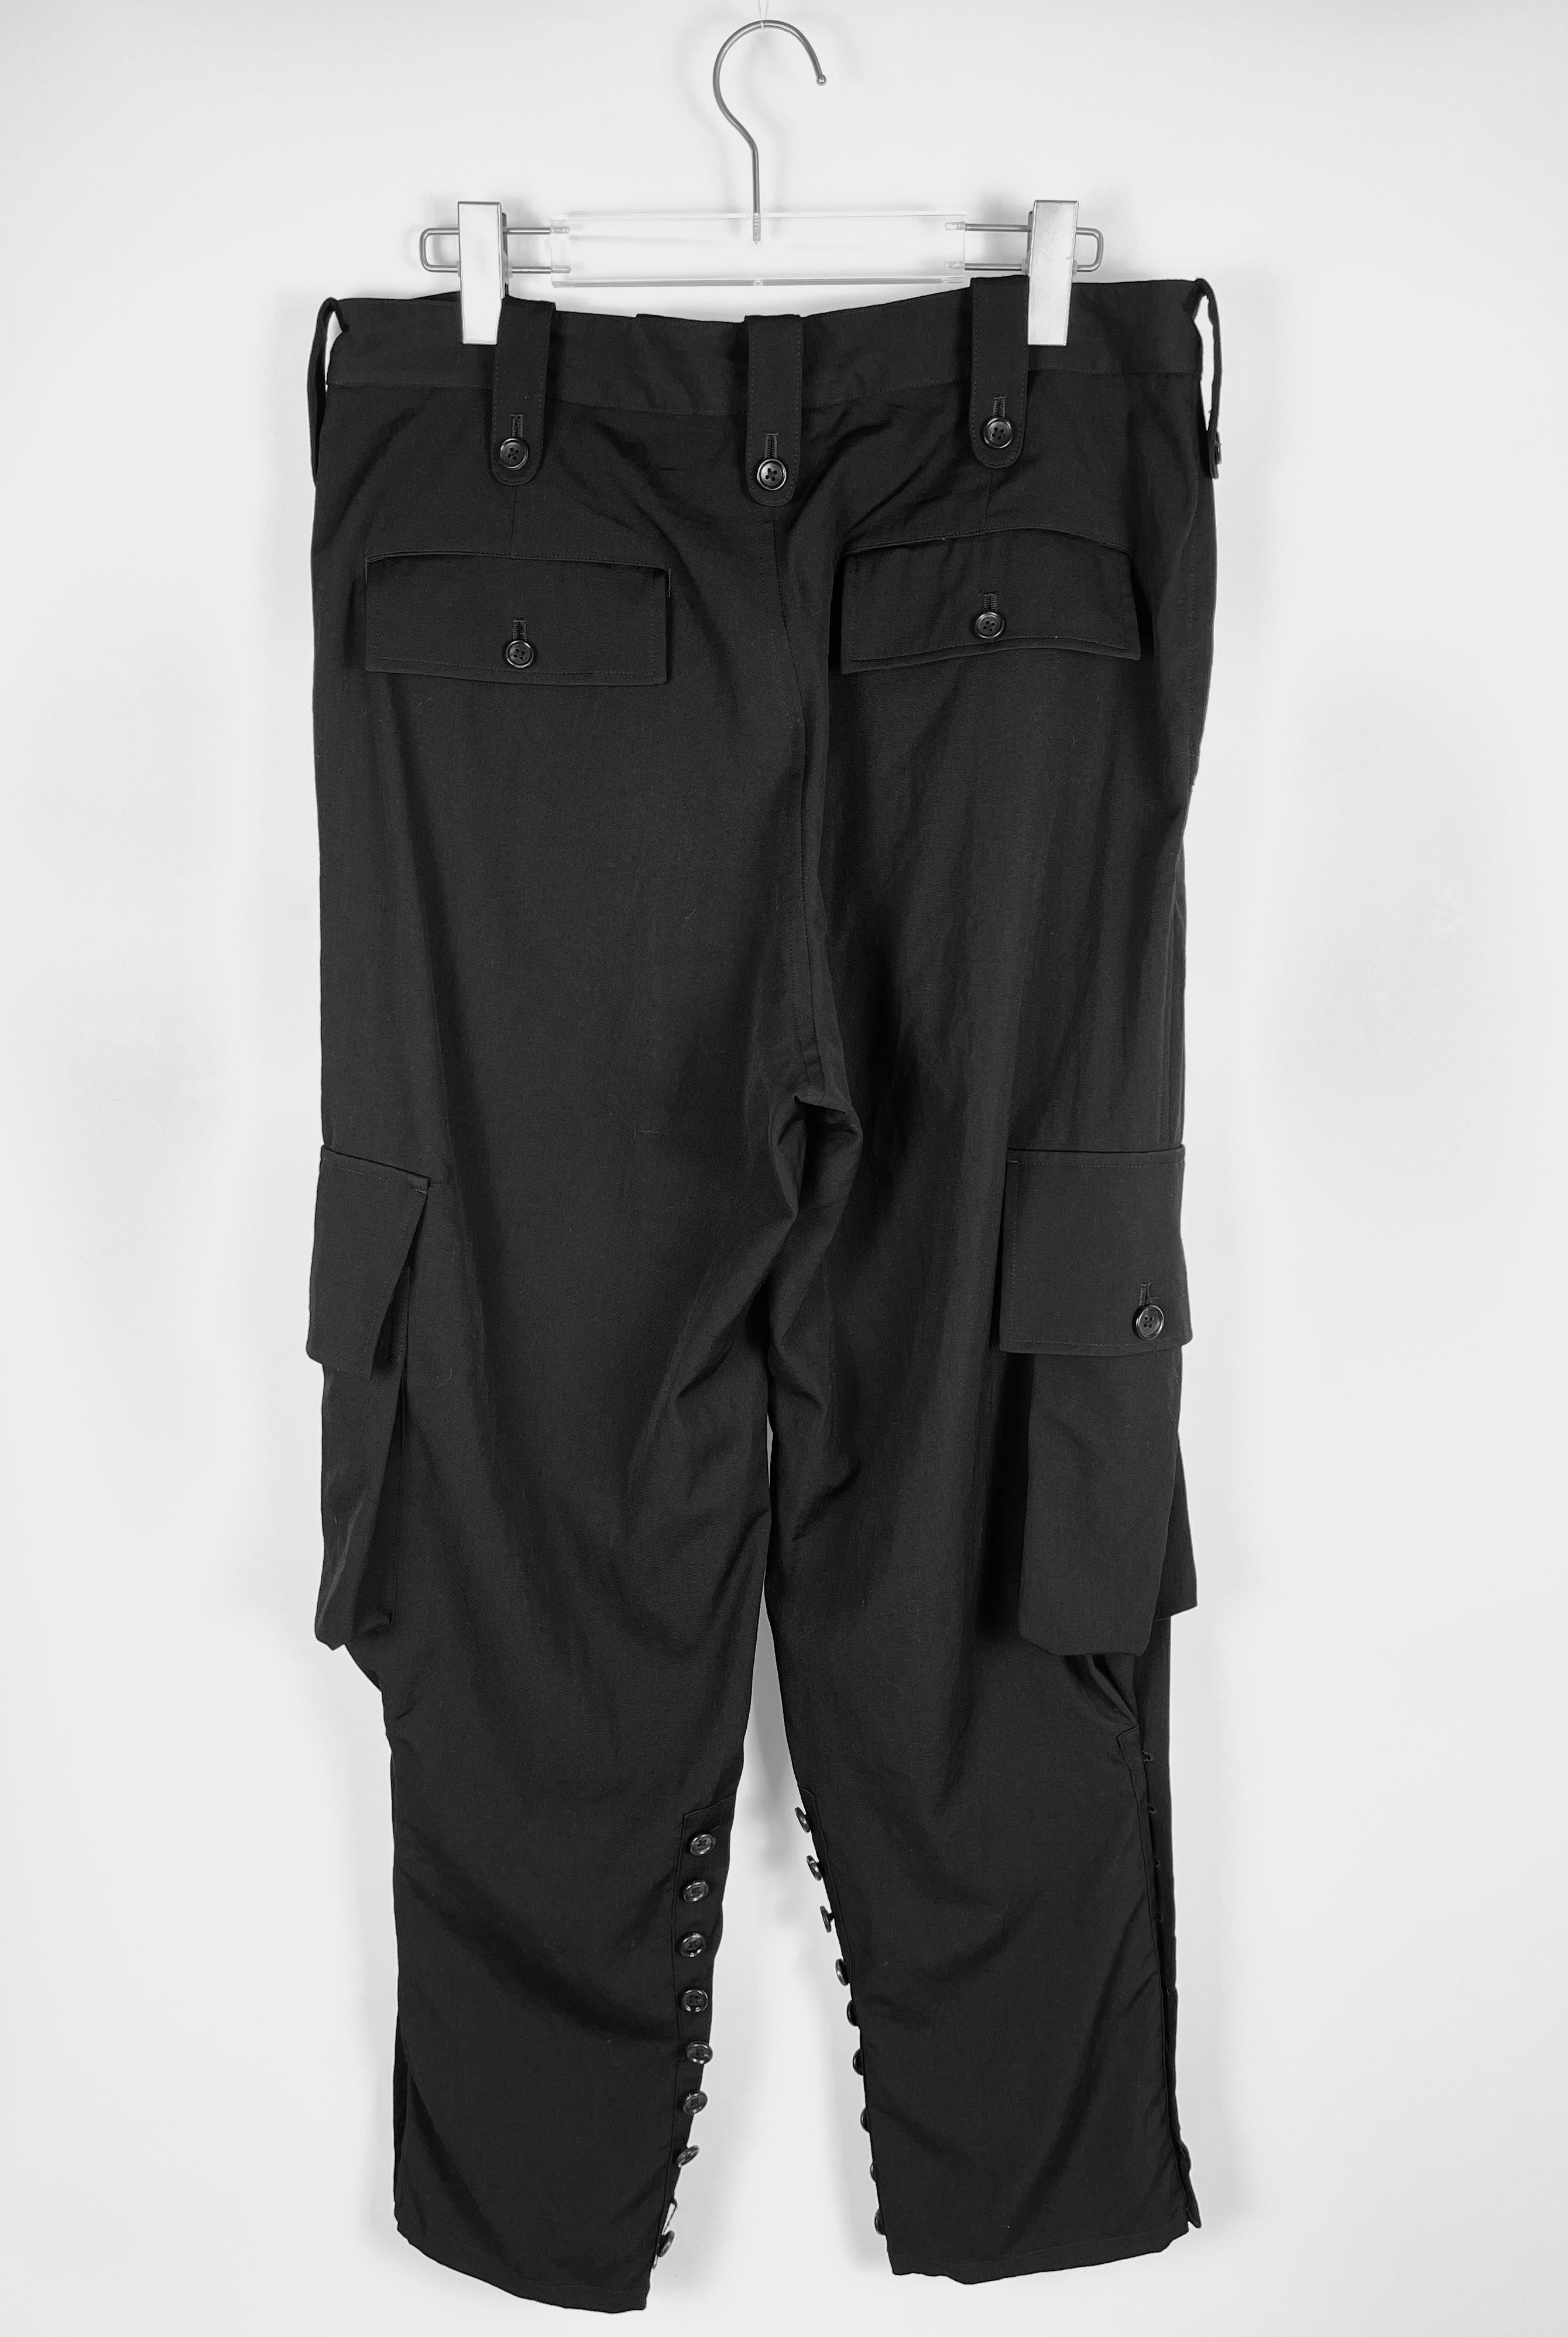 Yohji Yamamoto Pour Homme A/W2019 Heavy Cargo Pants For Sale 4